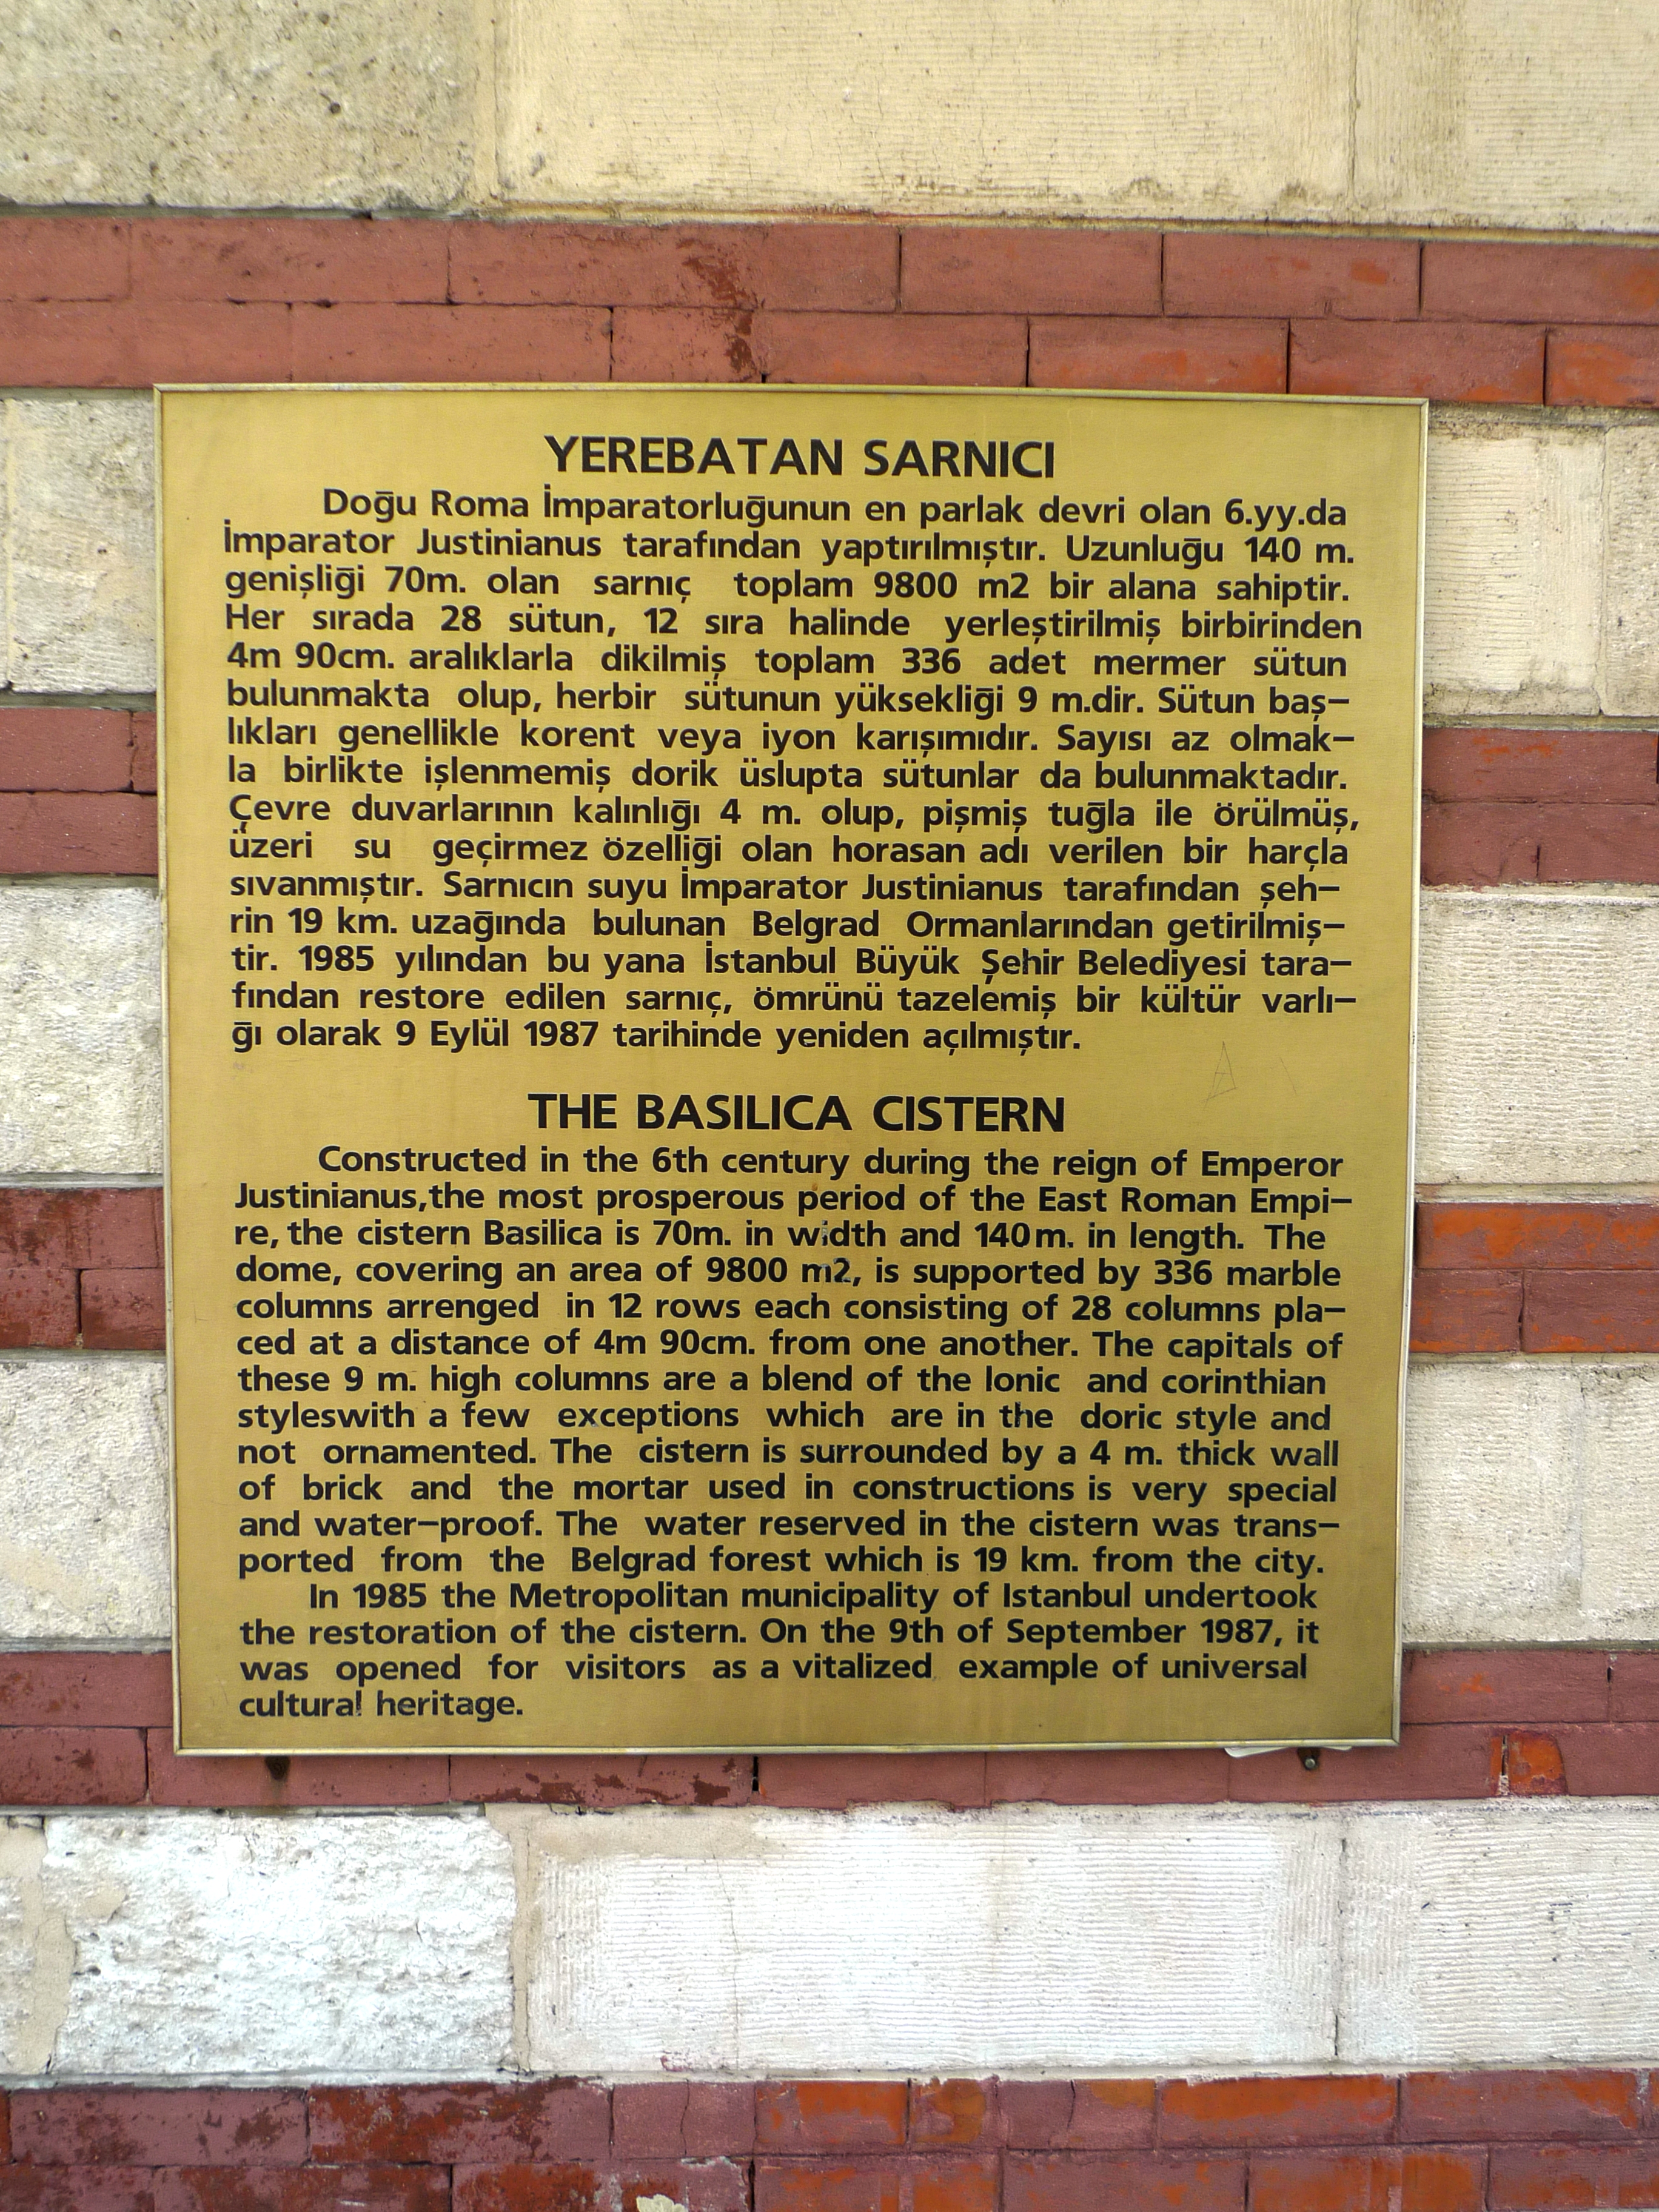 Basilica Cistern information